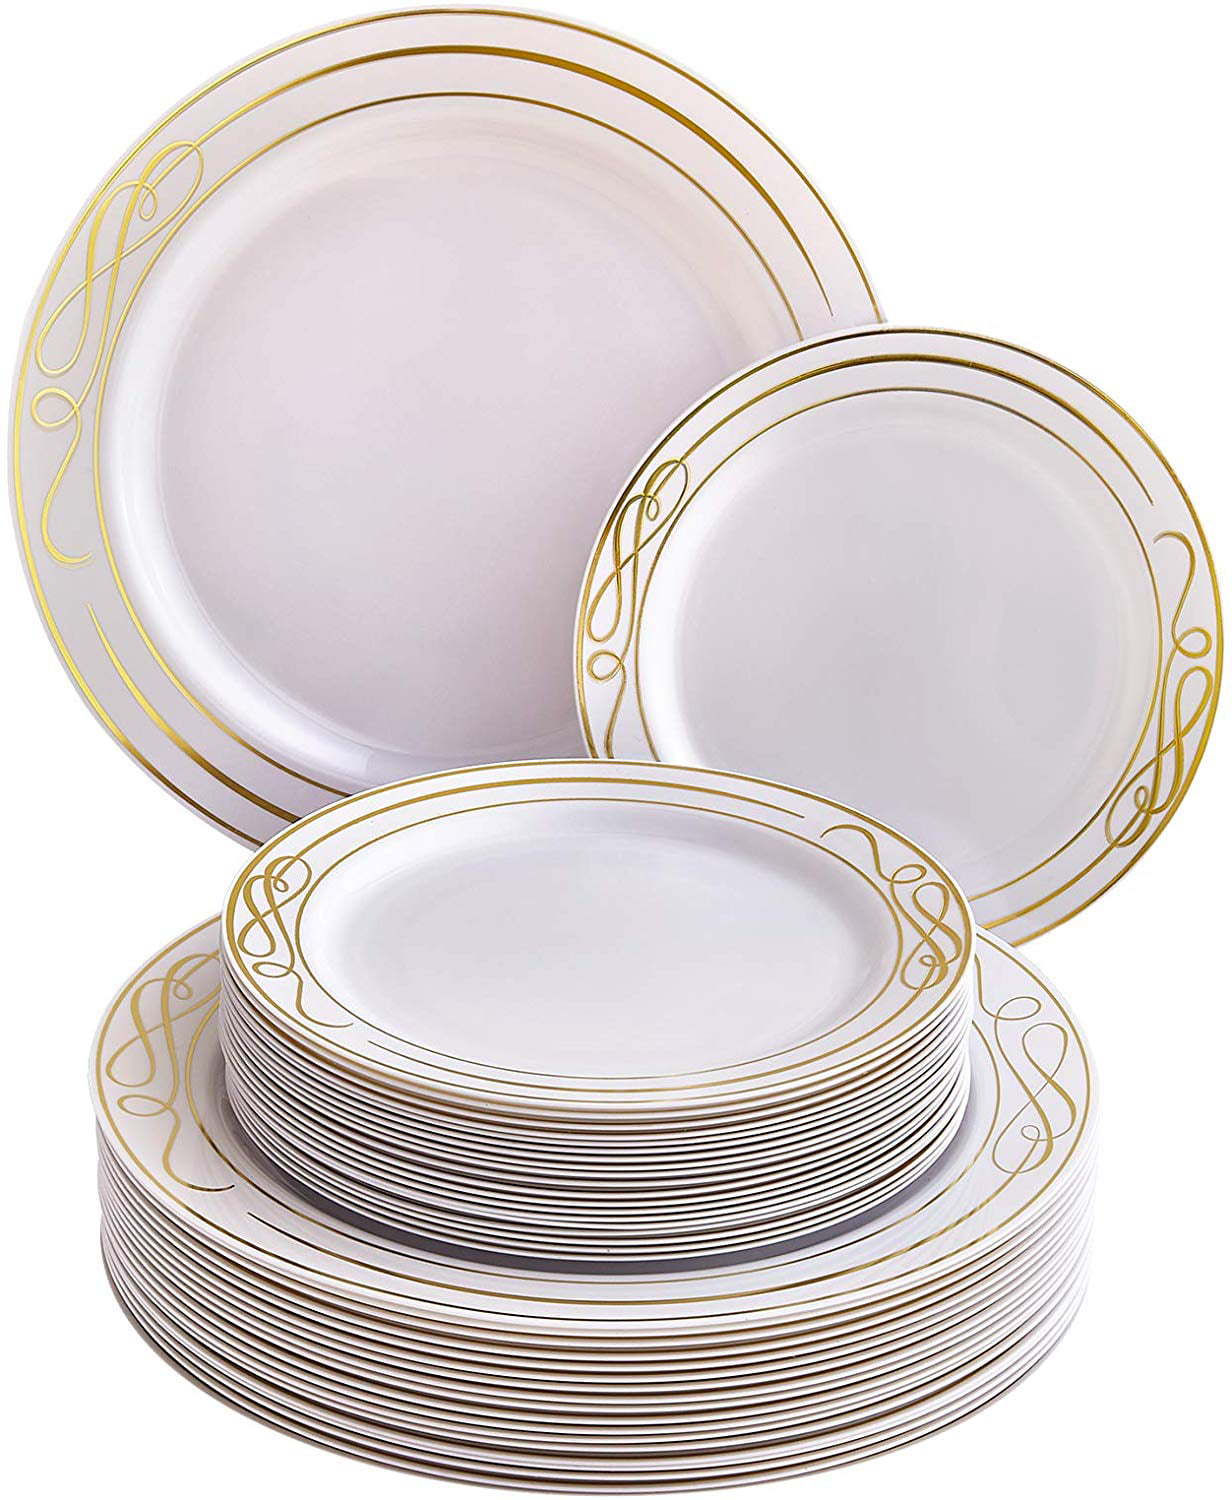 Fine Dining Plates Set - Sold Price: Set Of Twelve Lenox Fine Dinner ...